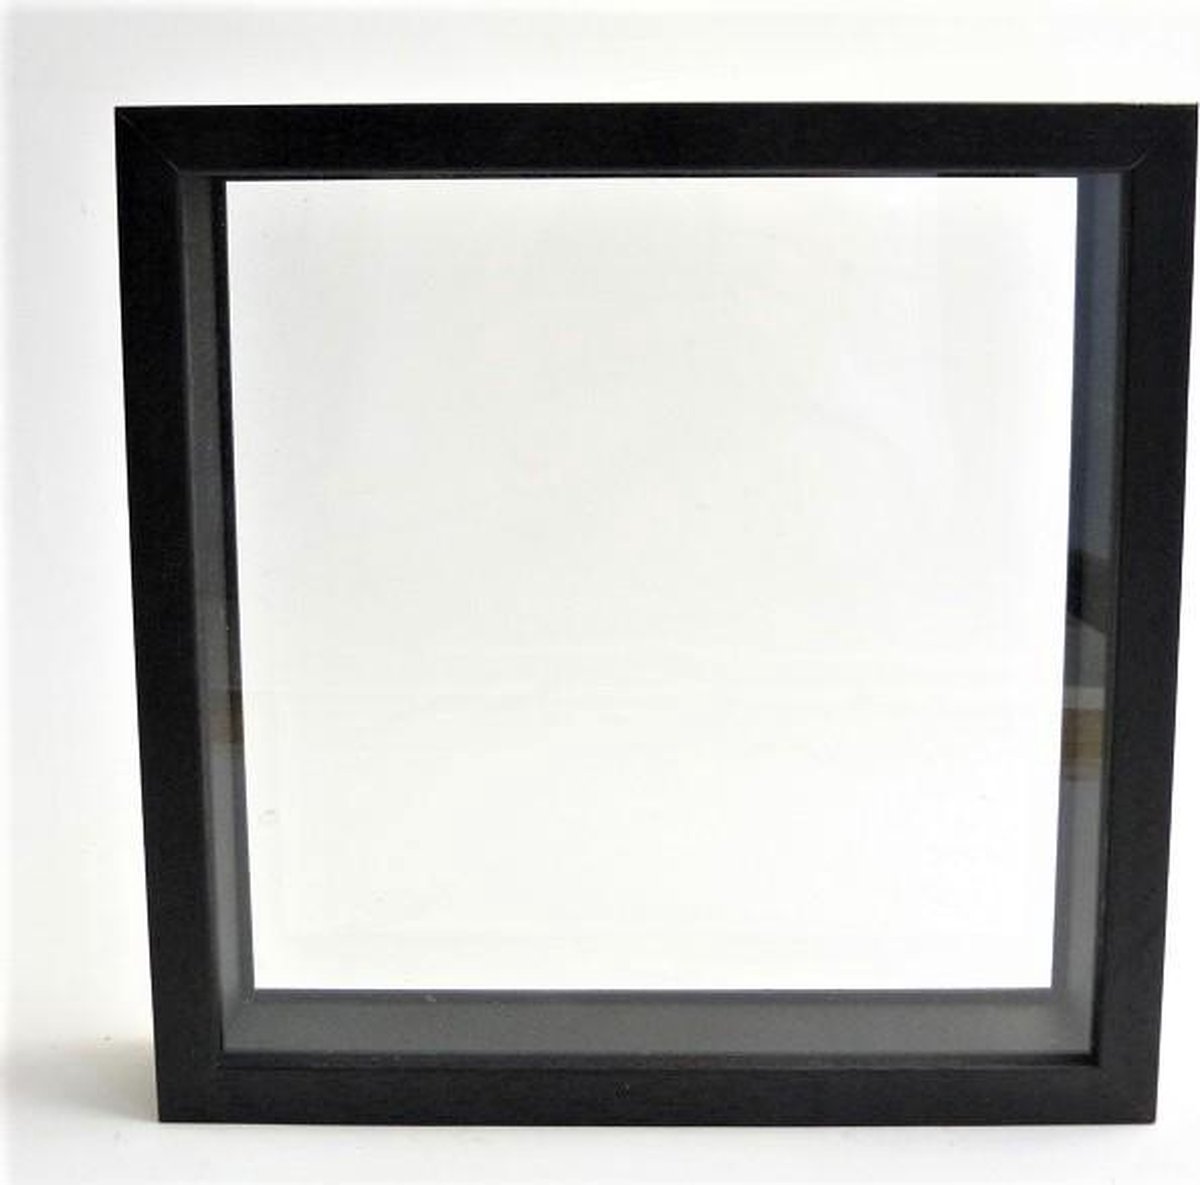 Zwart houten dubbelglas lijst 24 cm x 24 cm | bol.com